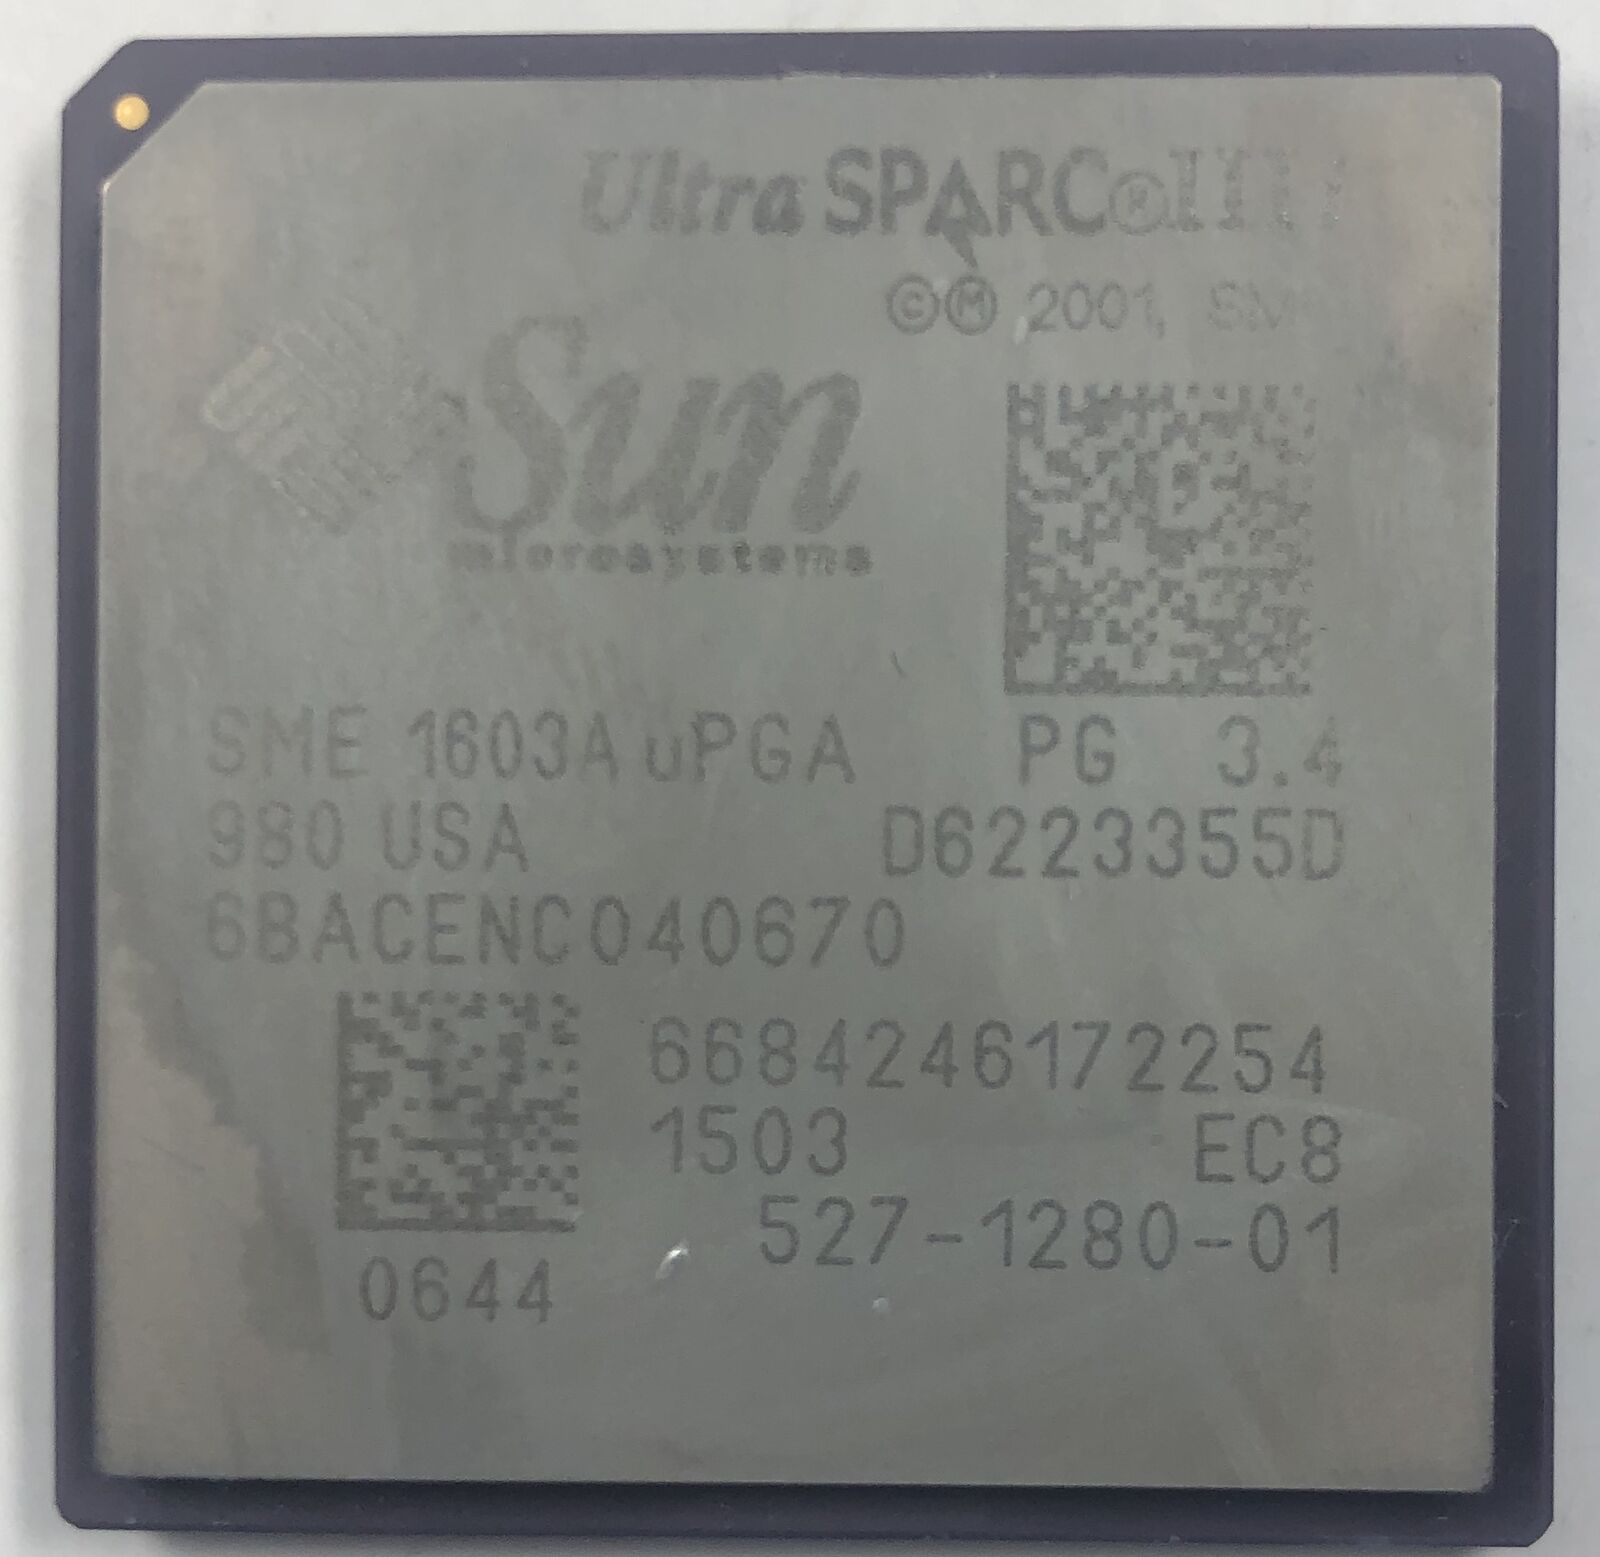 Sun Sunfire V240 Server Ultra SPARC III CPU Processor- 527-1280-01